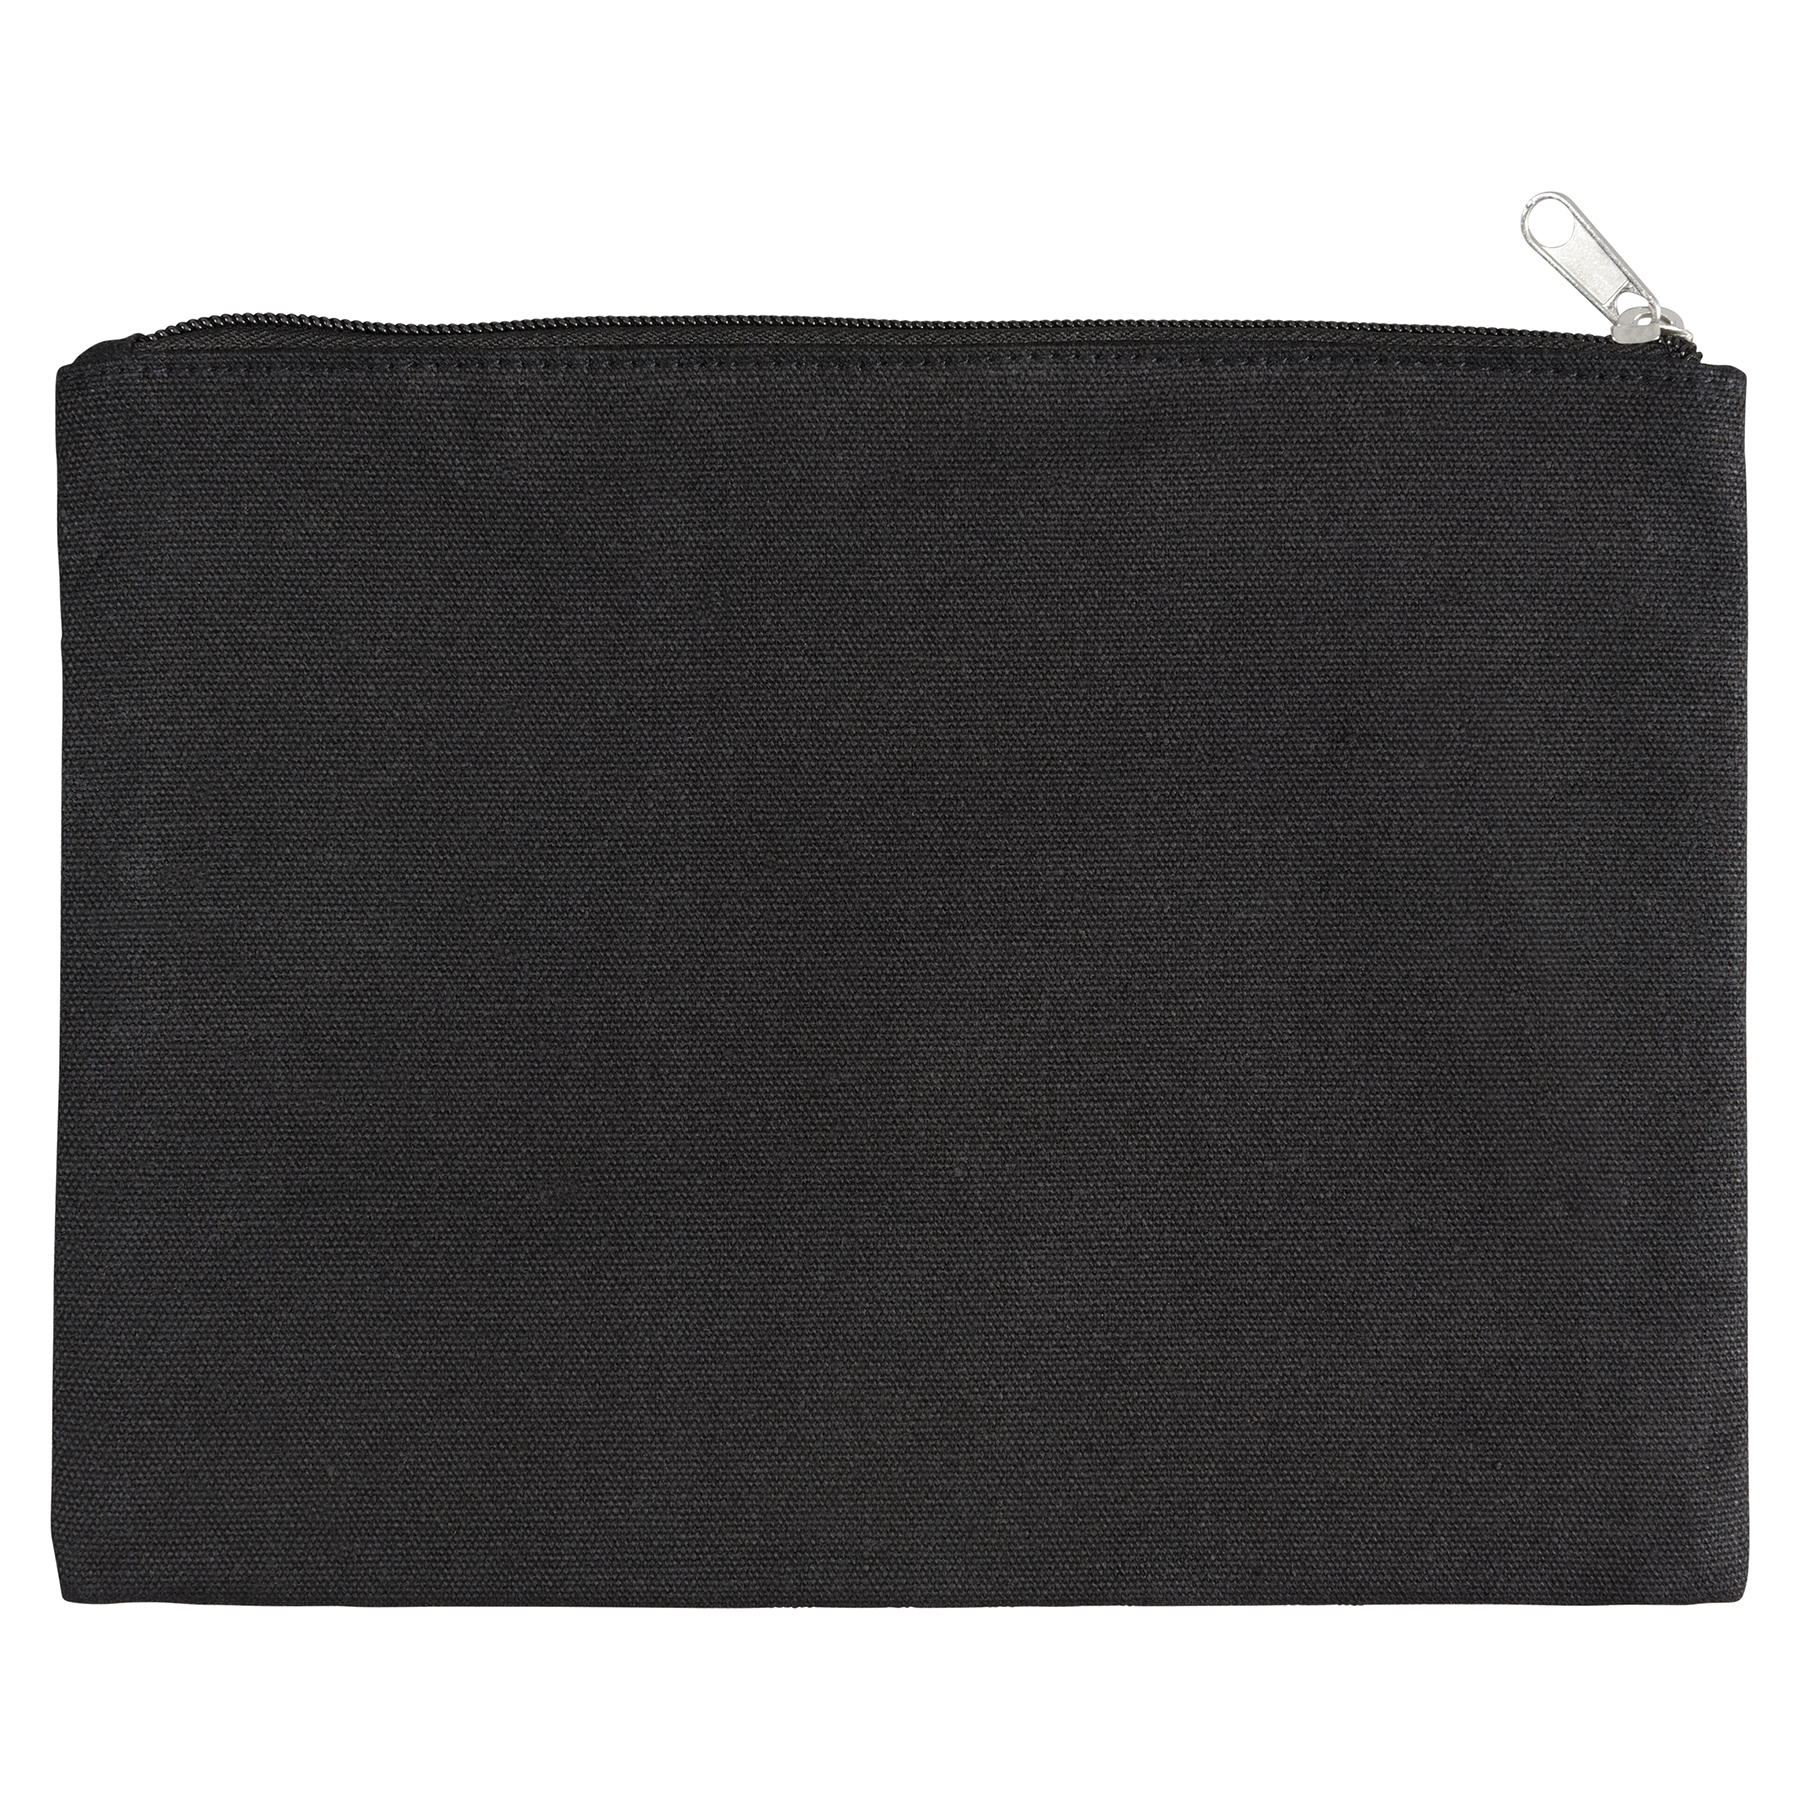 Black Canvas Pouch by Make Market®